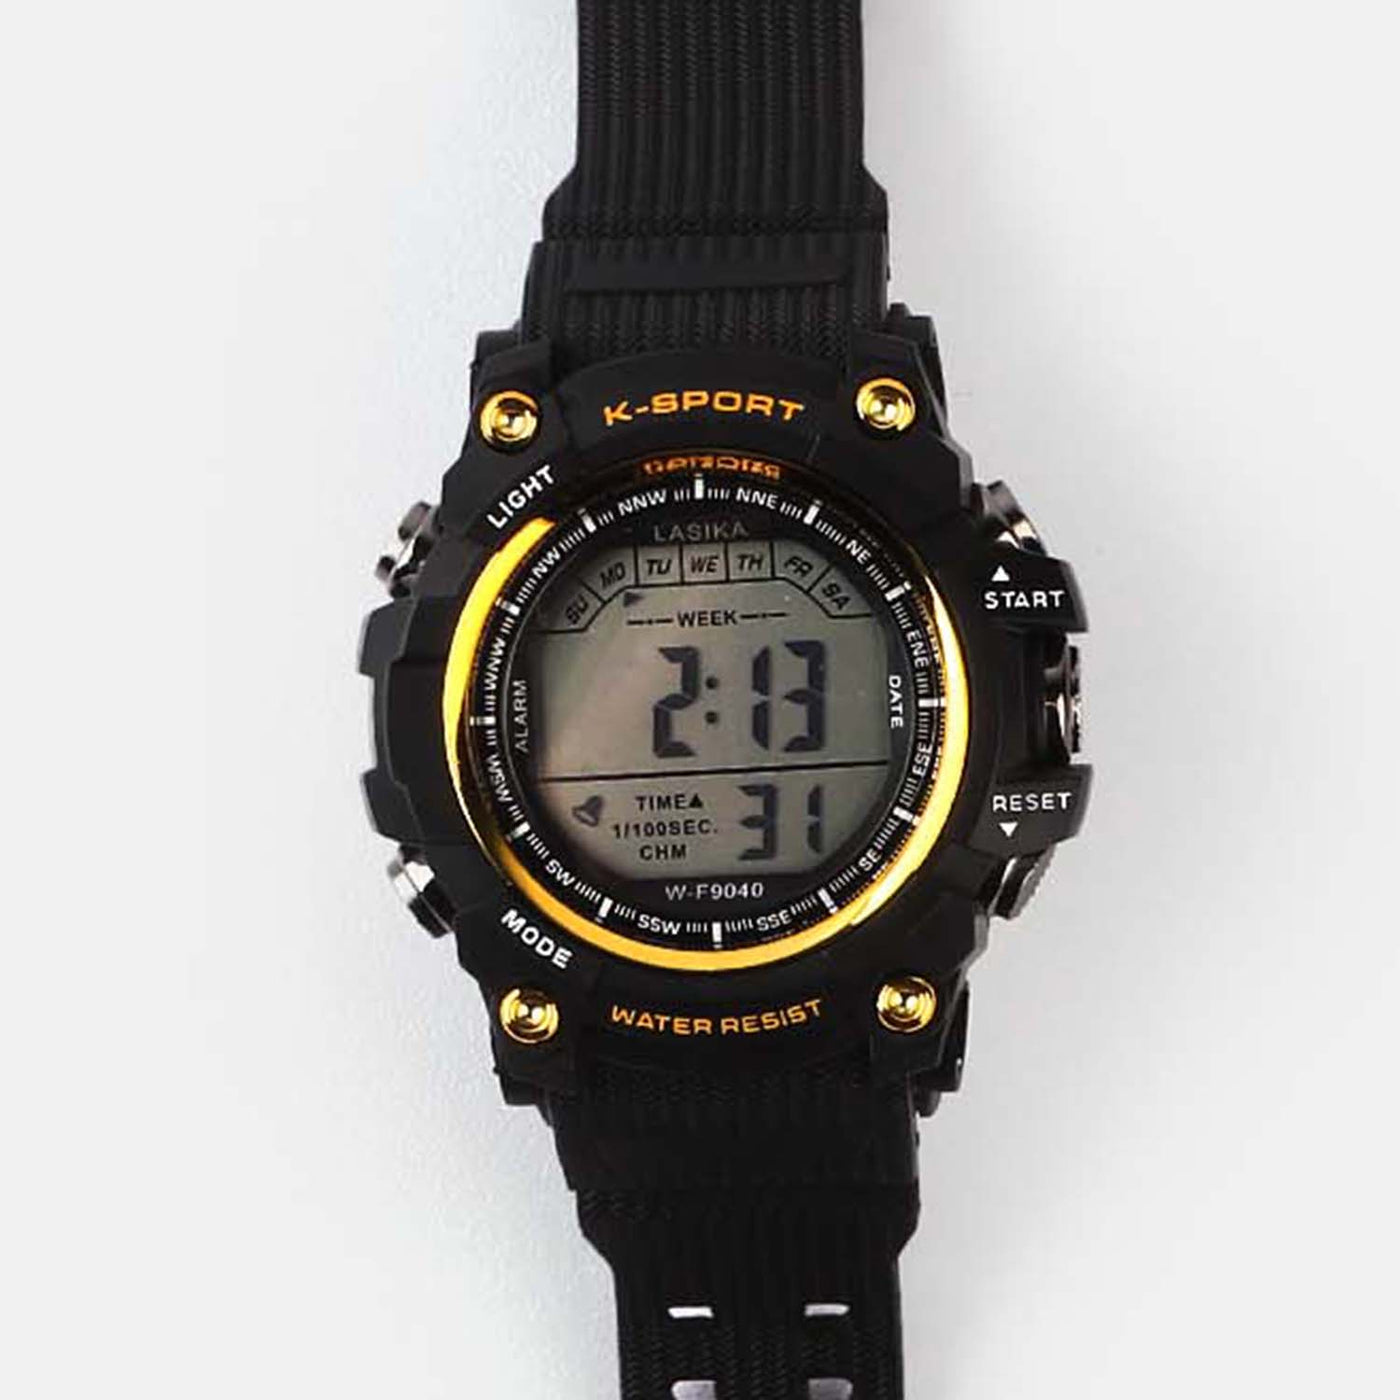 Lasika LED Sports Digital watch For Kids